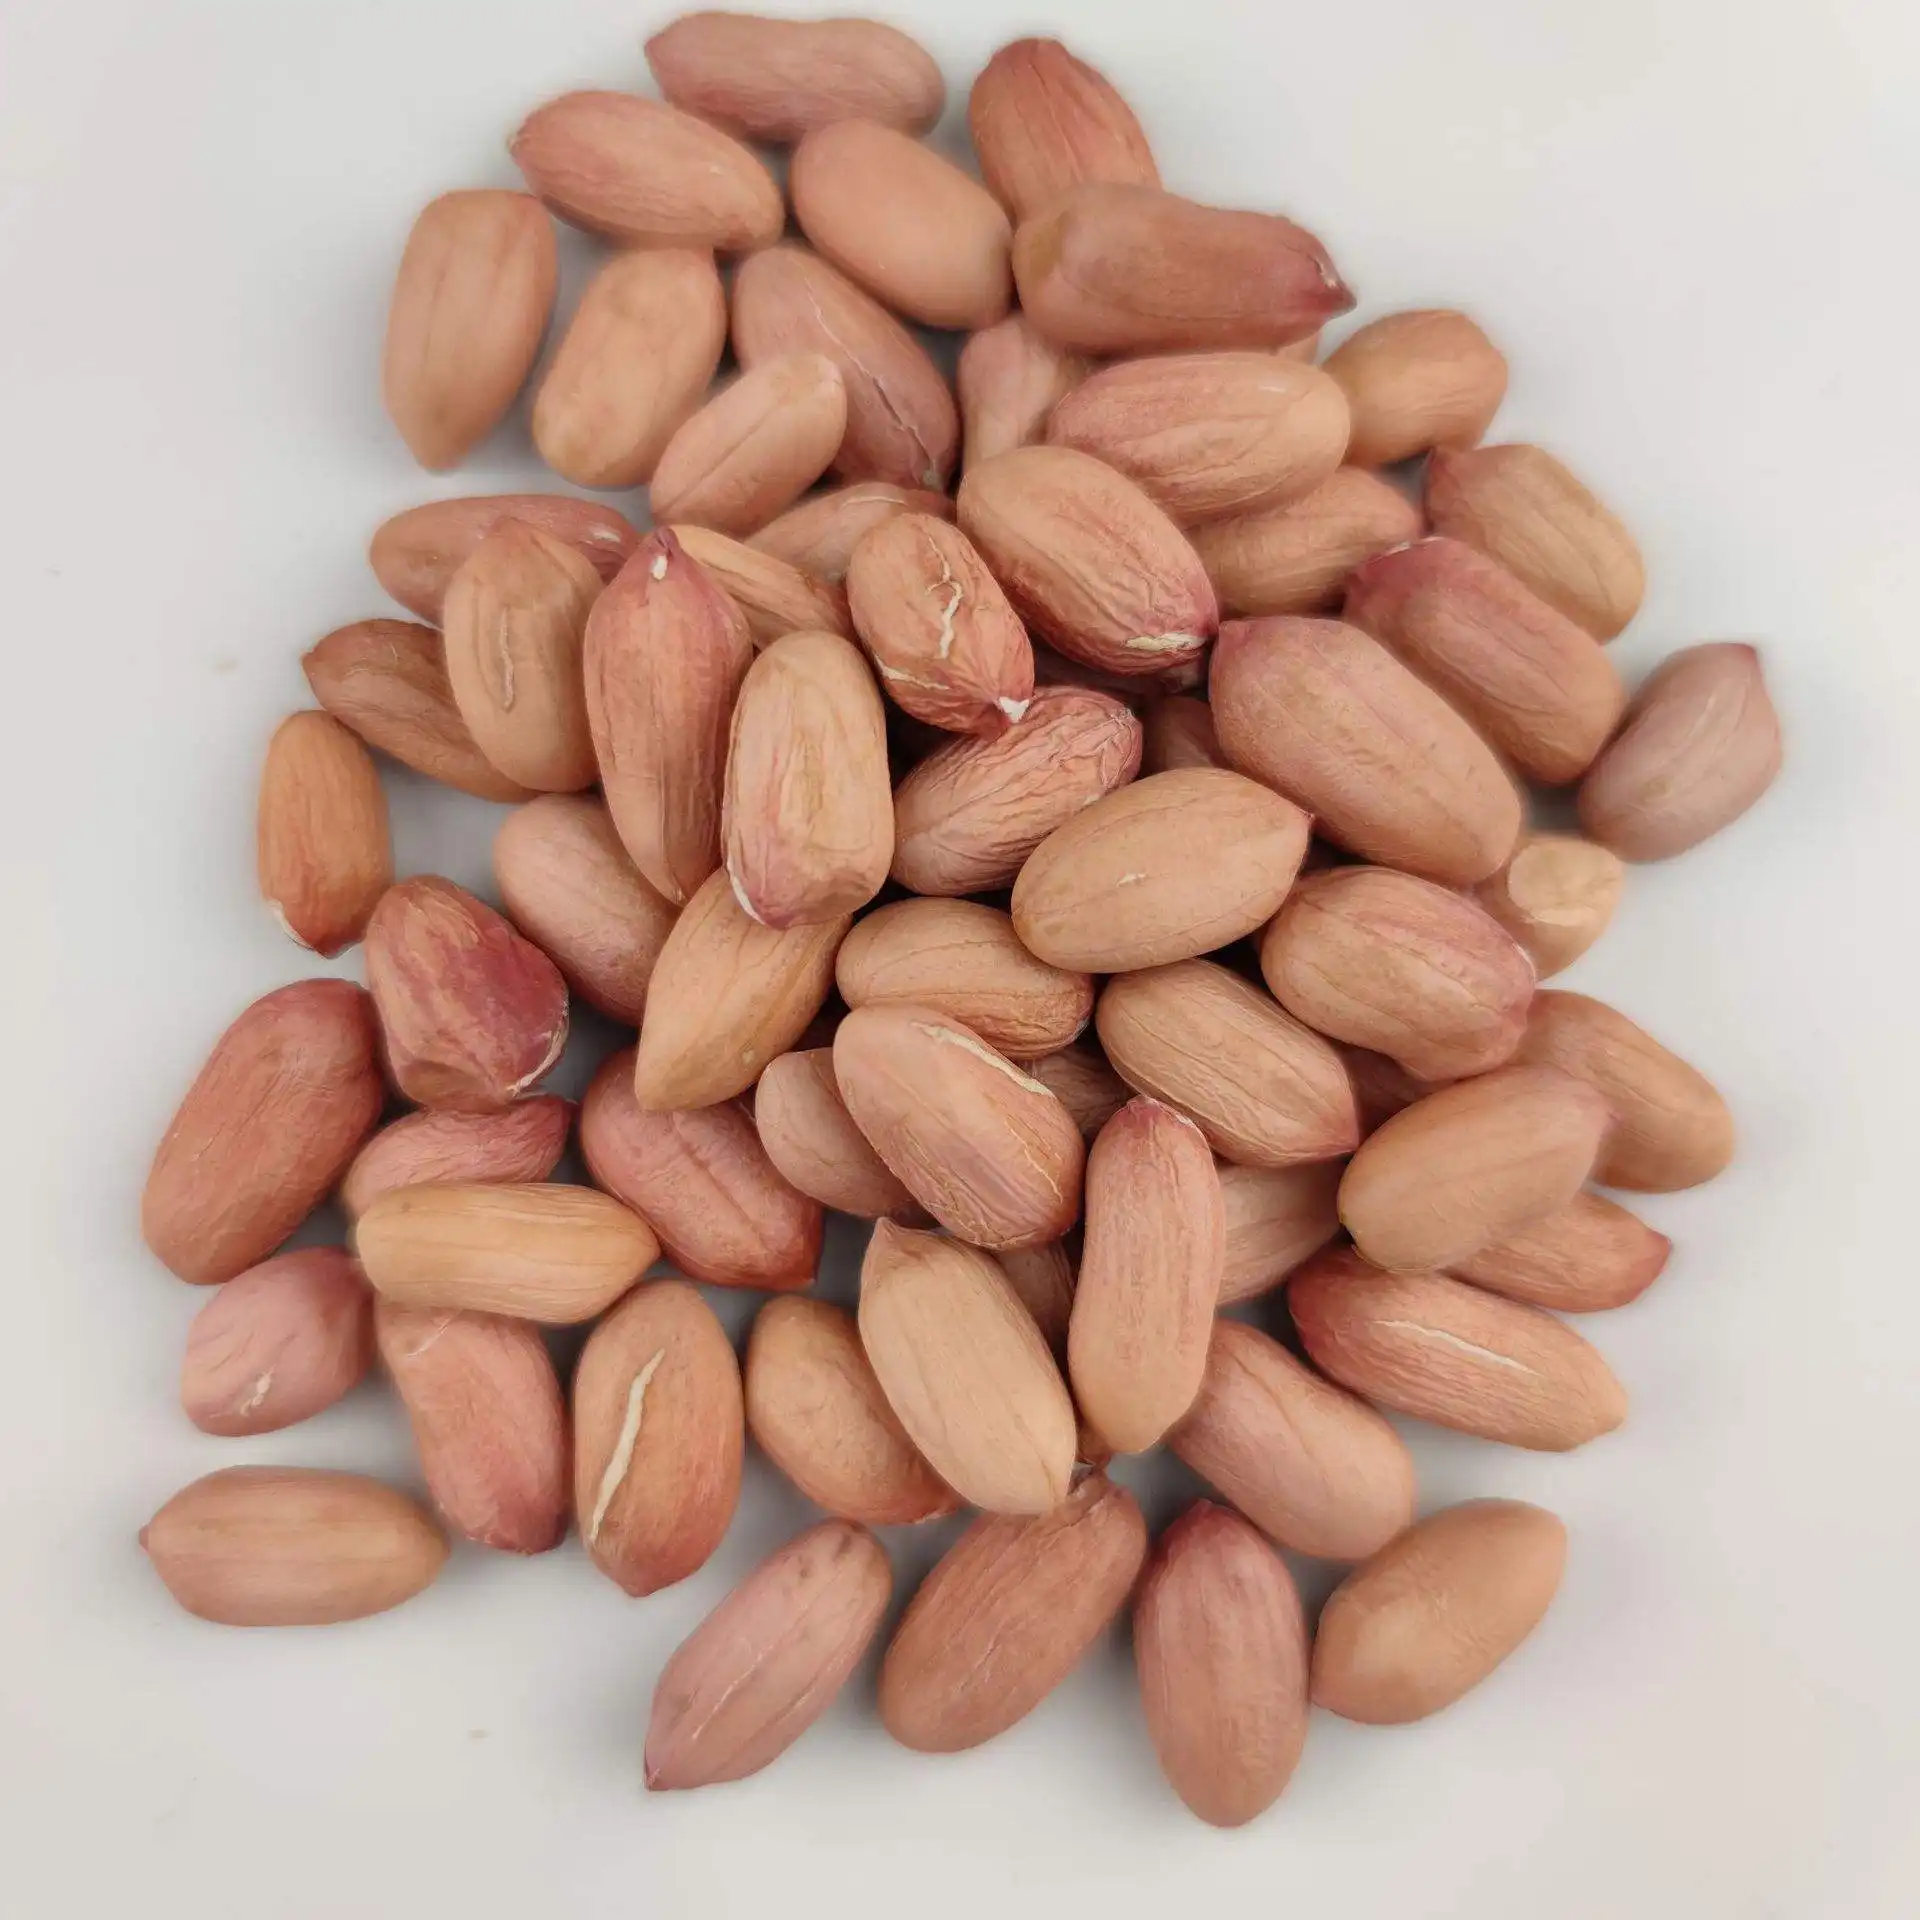 Cina vendita origine acquirenti all'ingrosso produttori di noccioli di arachidi pelati specifica prezzi di arachidi rosse sbollentate grezze